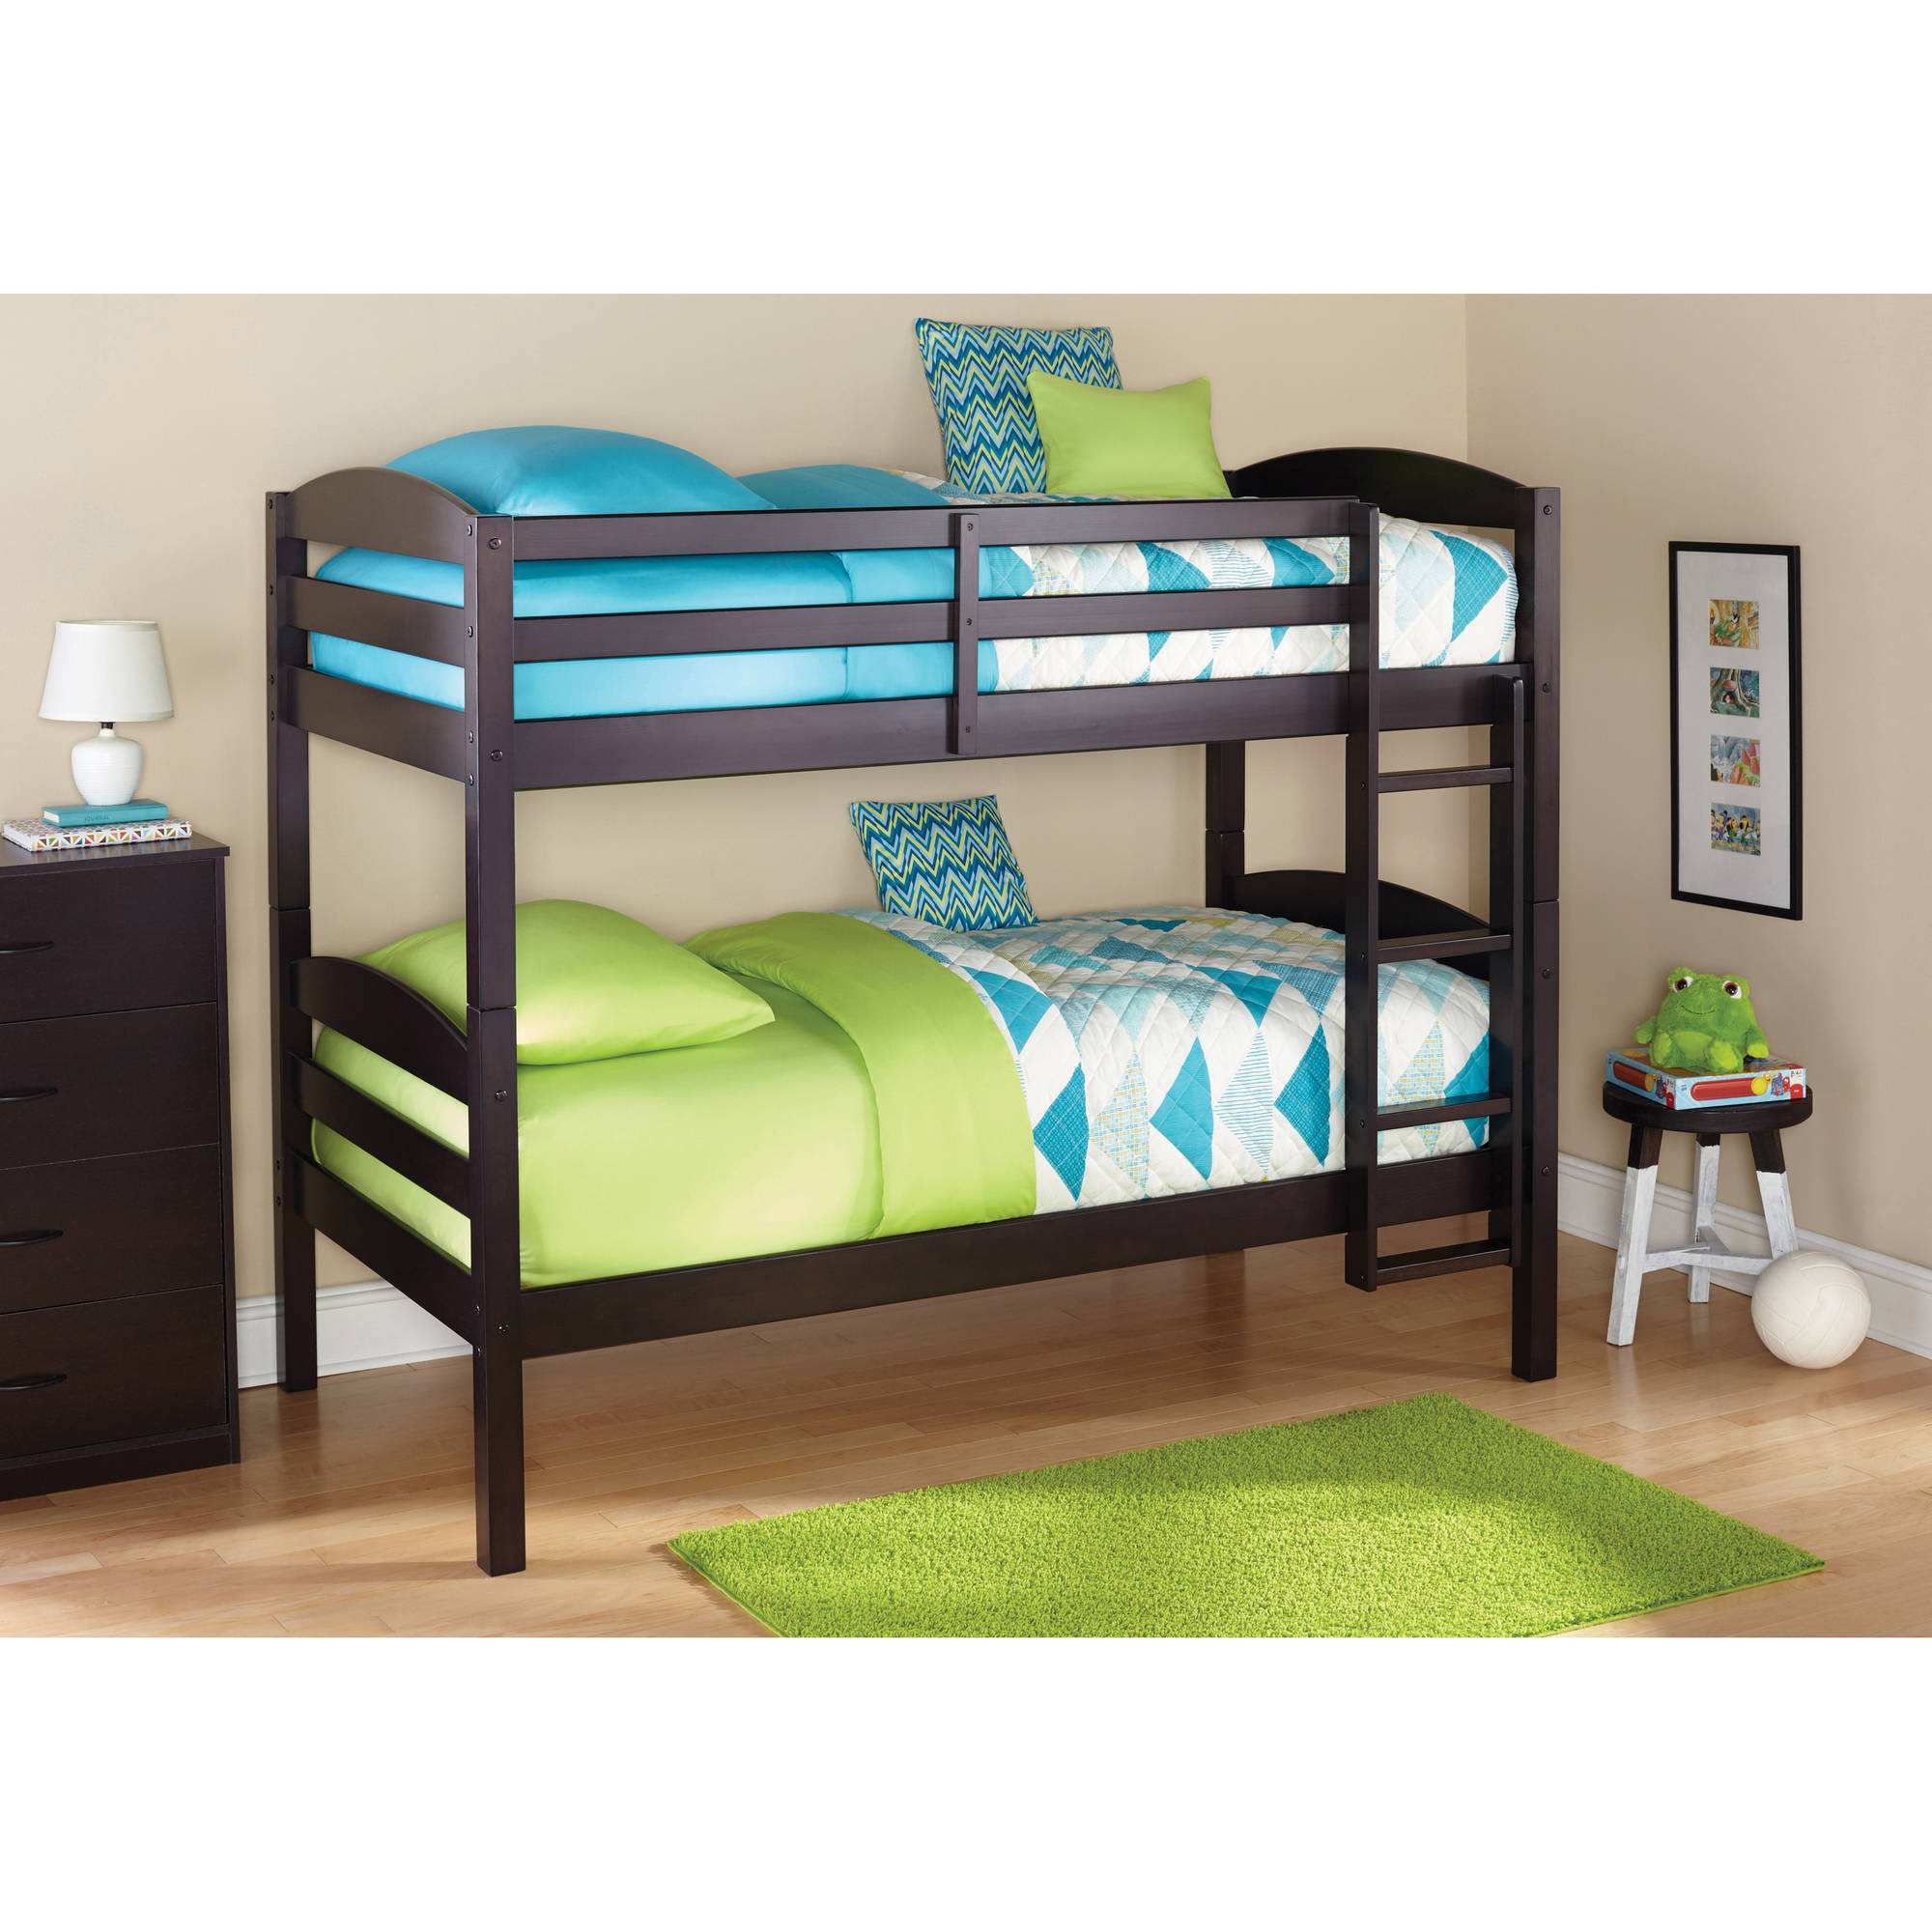 Kids Bunk Bed Bedroom Sets
 Bunk Beds Twin Over Twin Kids Furniture Bedroom Ladder